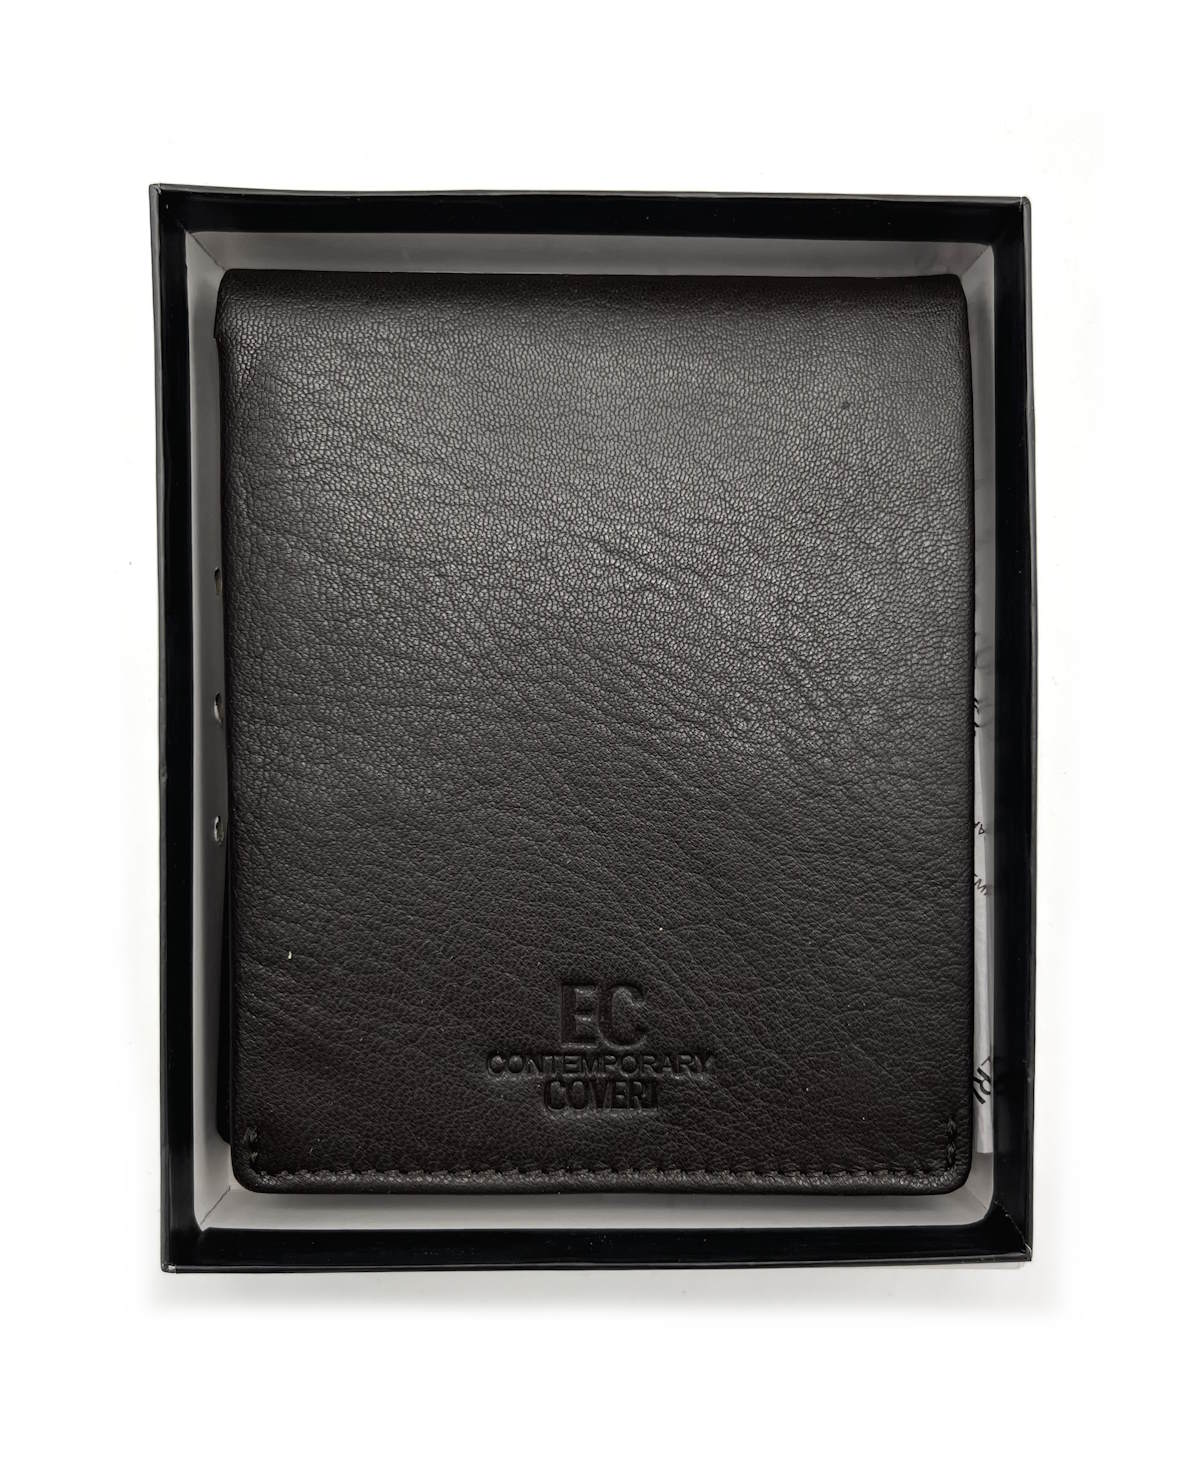 Genuine leather wallet, Brand EC COVERI, art. EC23760-41